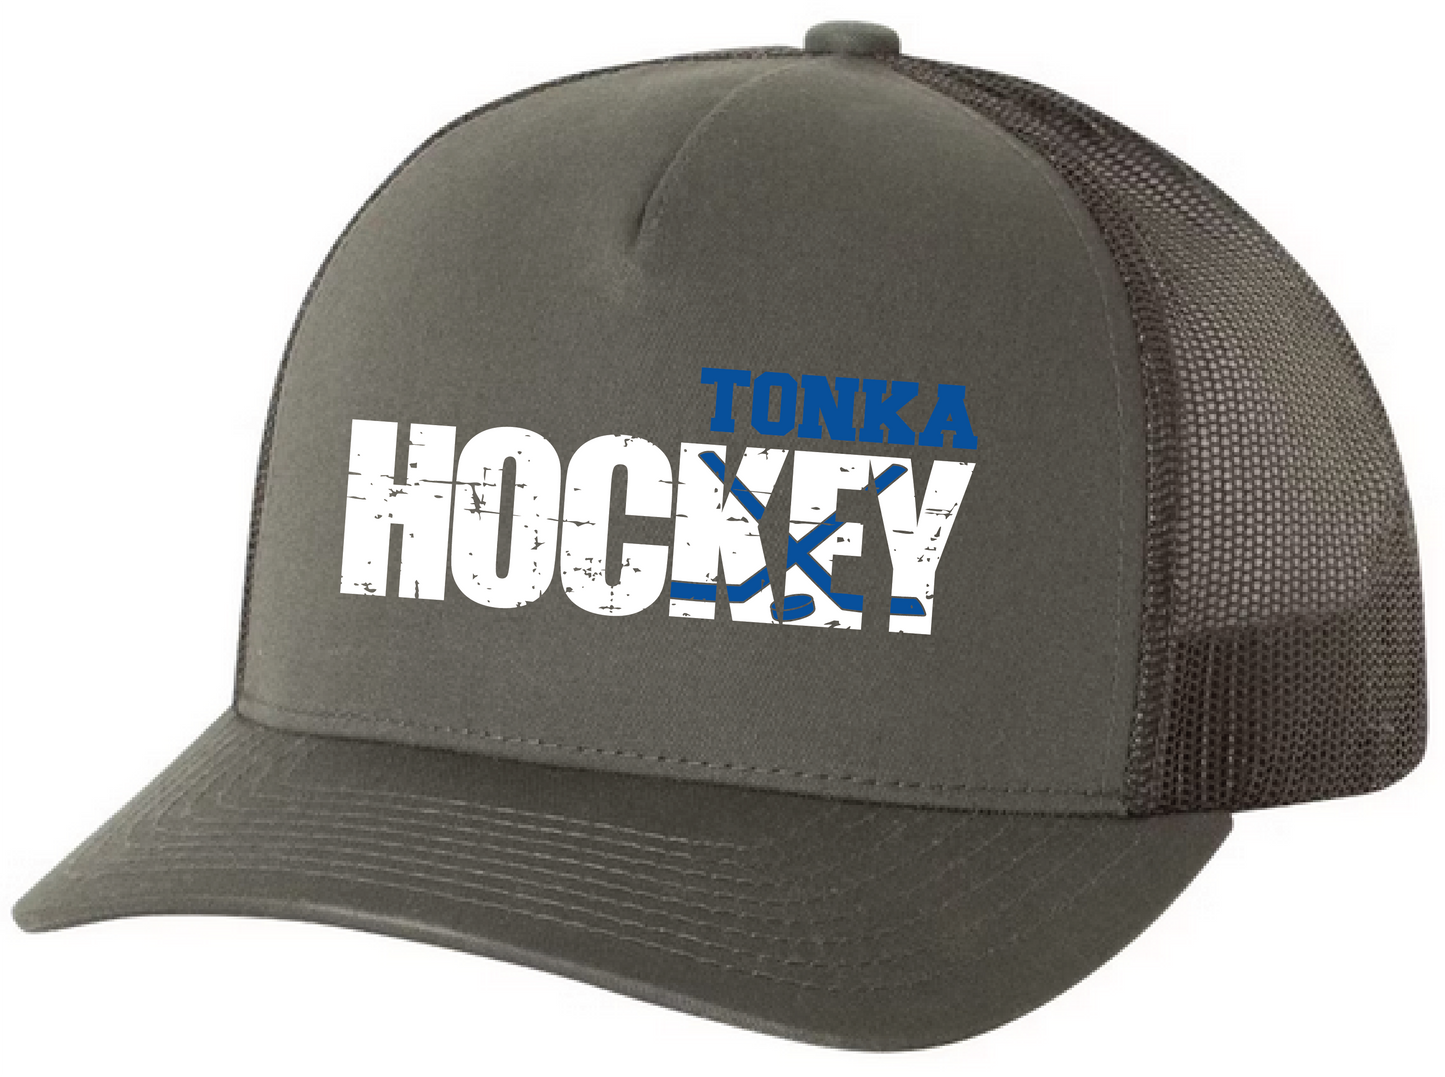 Tonka Hockey Distorted Graphite/Graphite